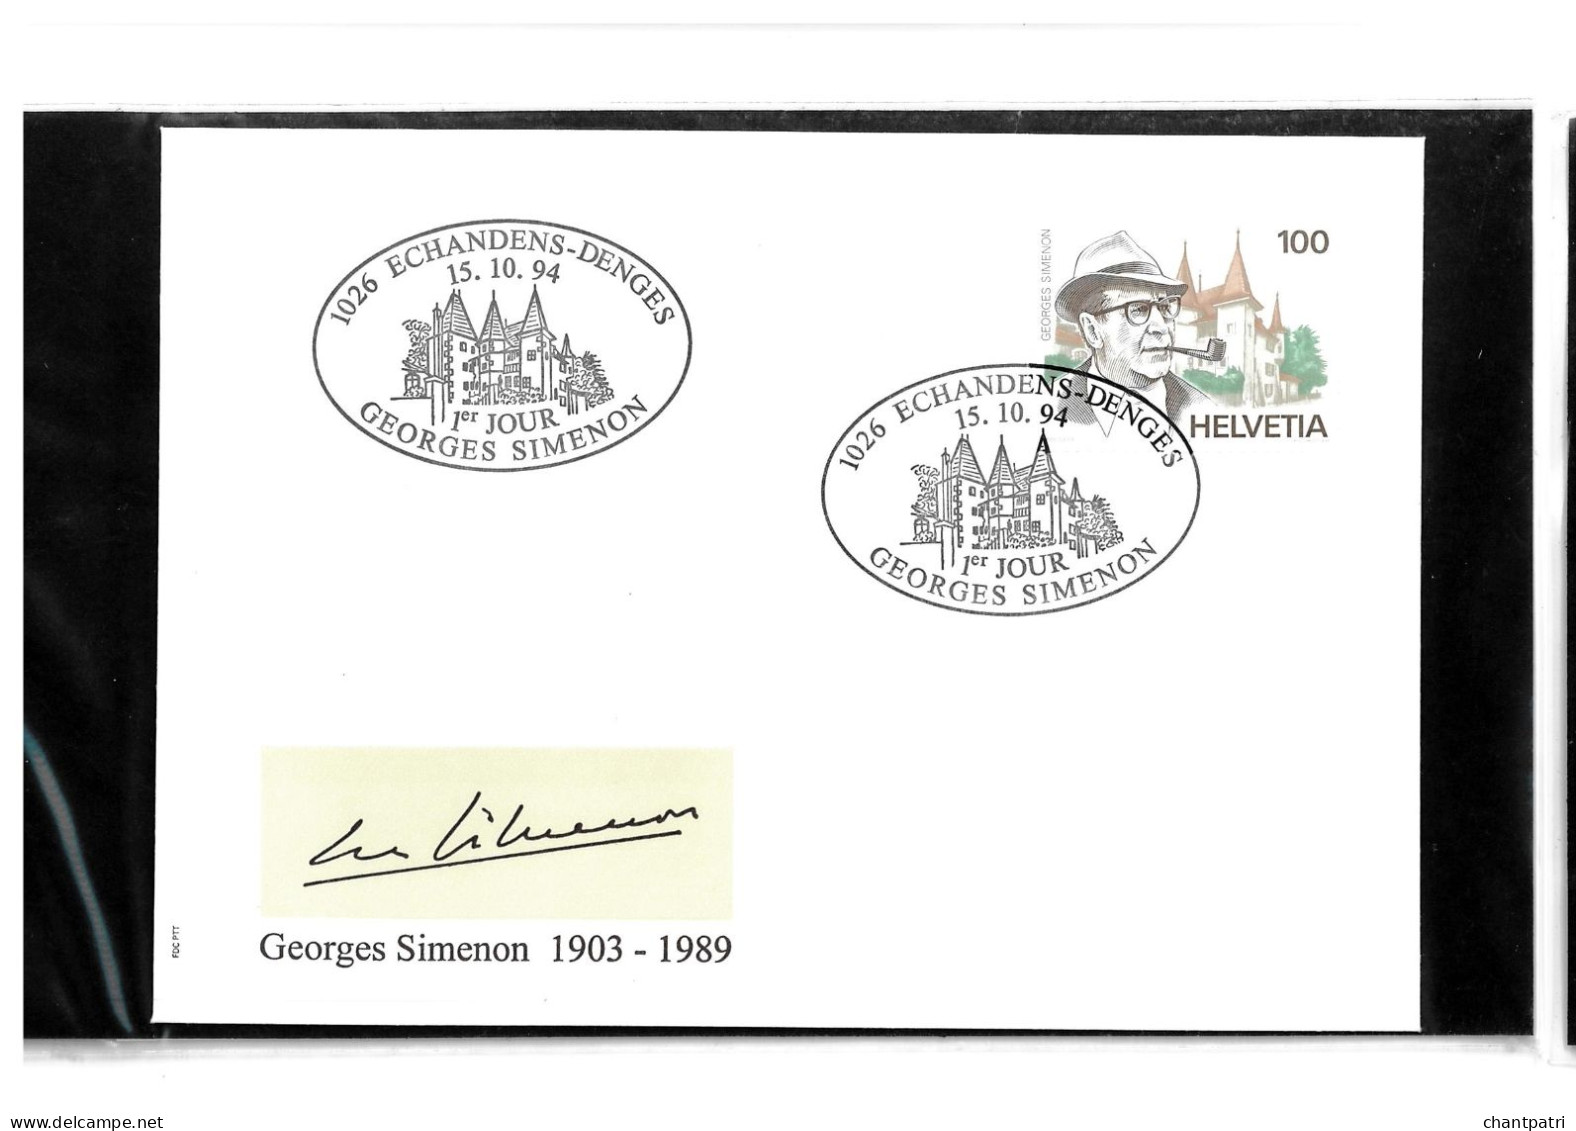 1026 Echandens Denges - 1er Jour Georges Simenon - 15 10 1994 - Beli FDC 117 - Covers & Documents